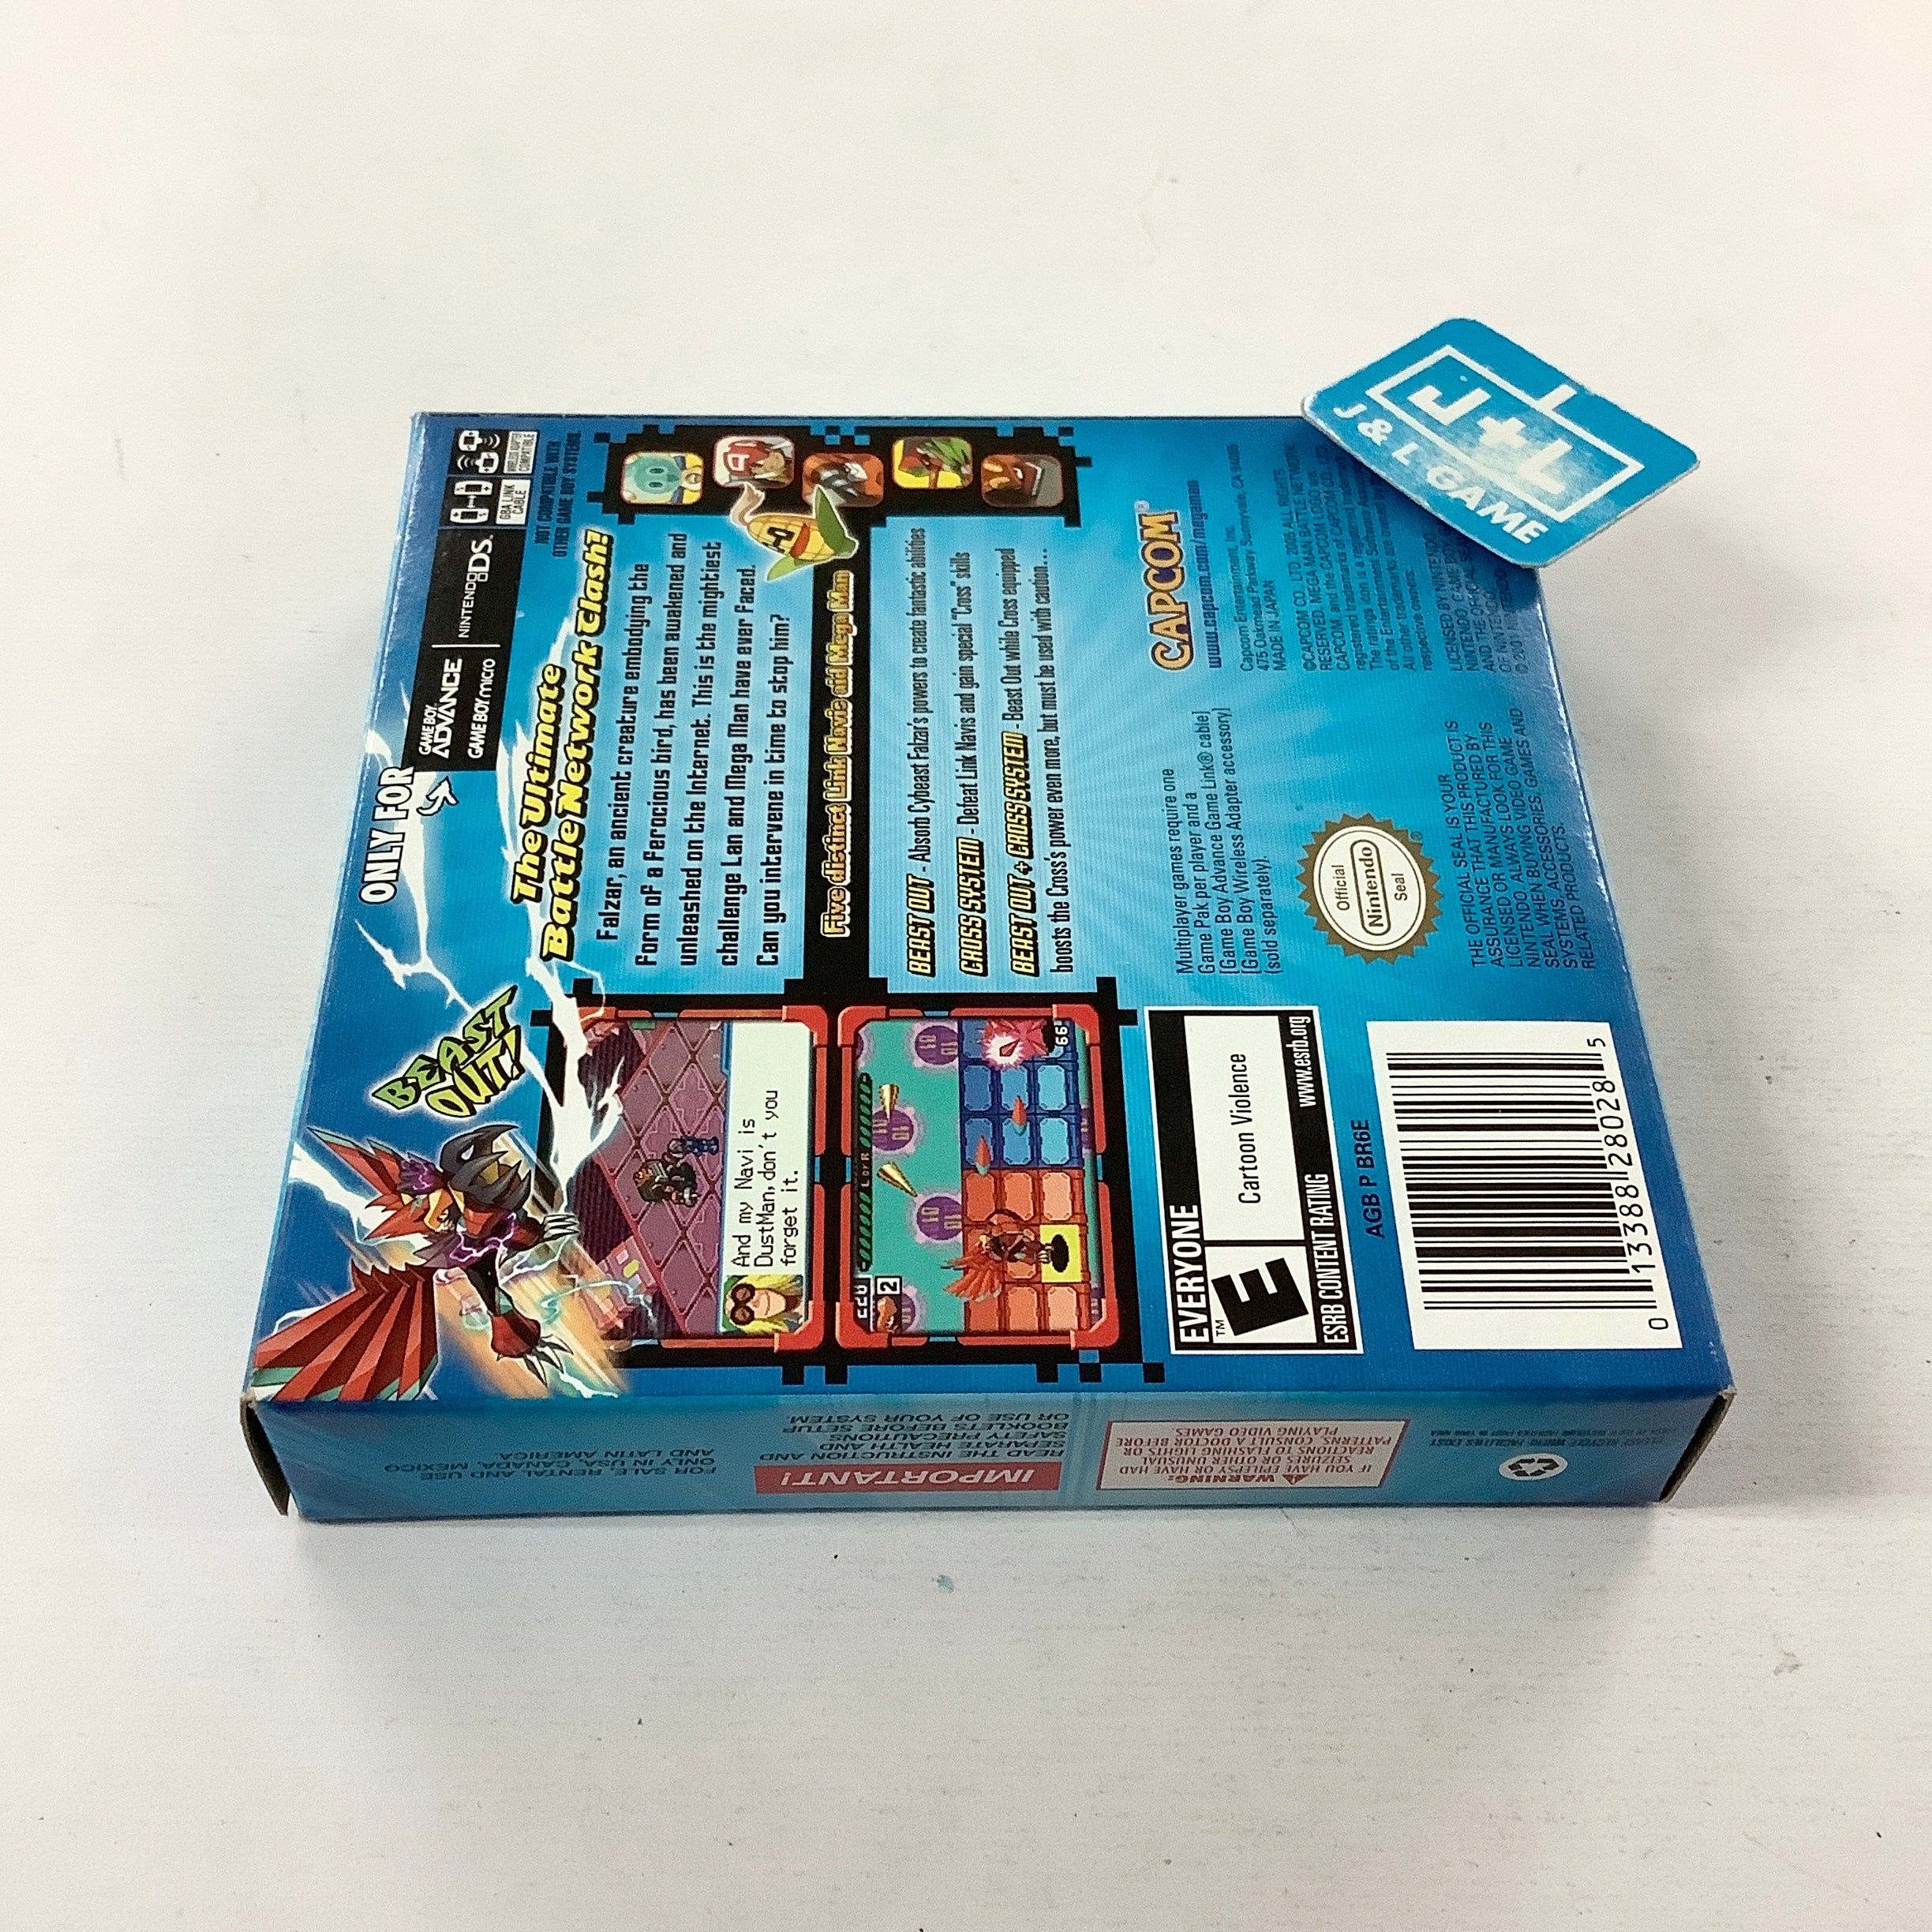 Mega Man Battle Network 6: Cybeast Falzar - (GBA) Game Boy Advance [Pre-Owned] Video Games Capcom   